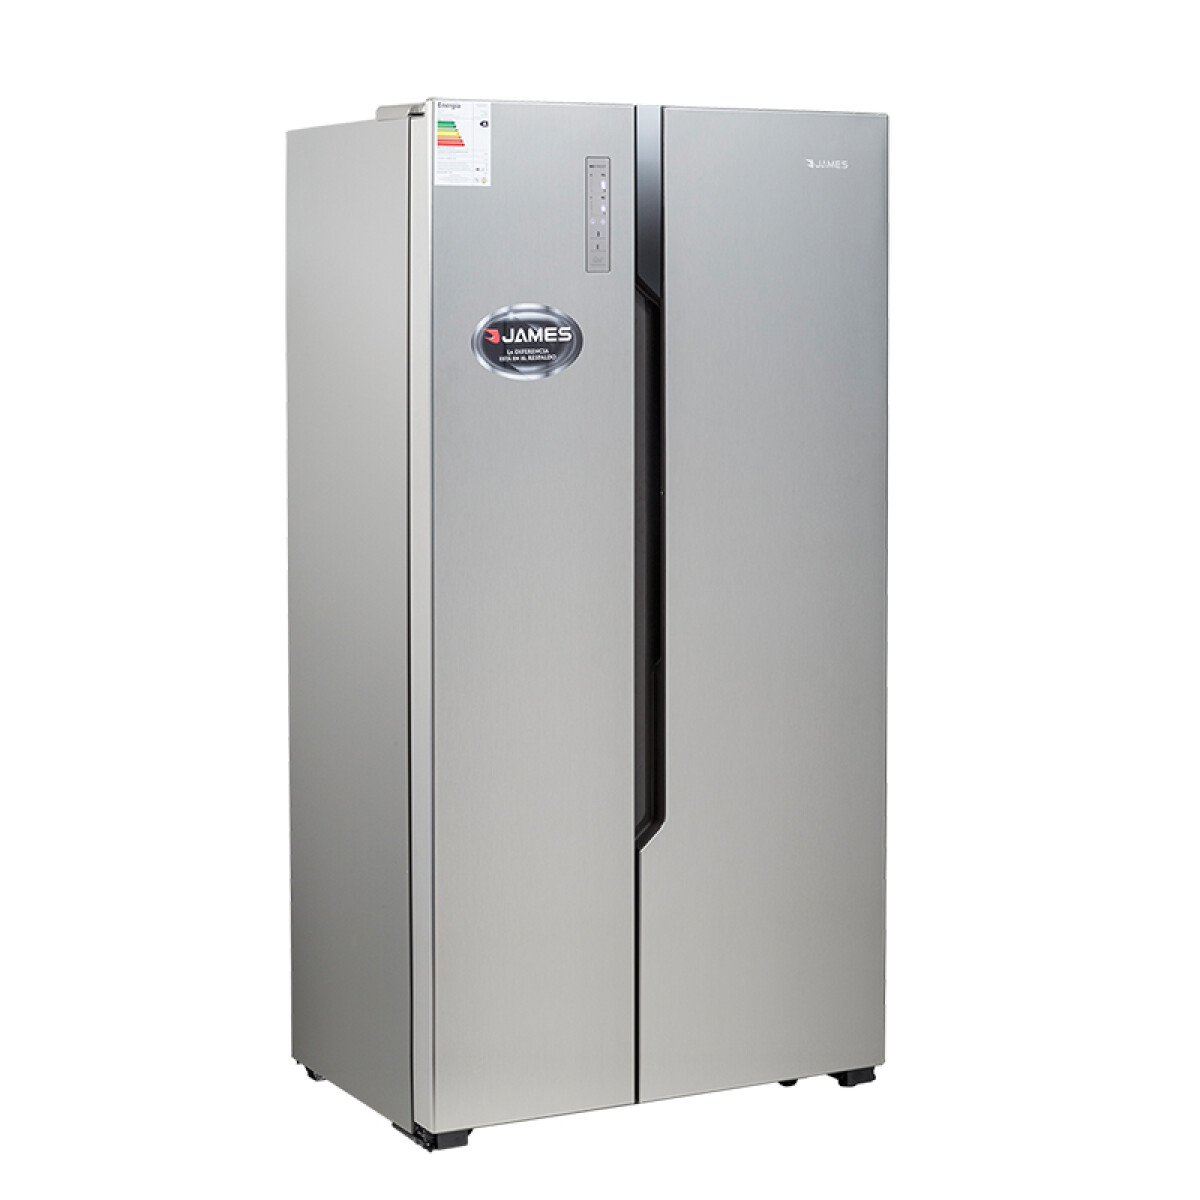 Refrigerador James RJ 40K SBSI 